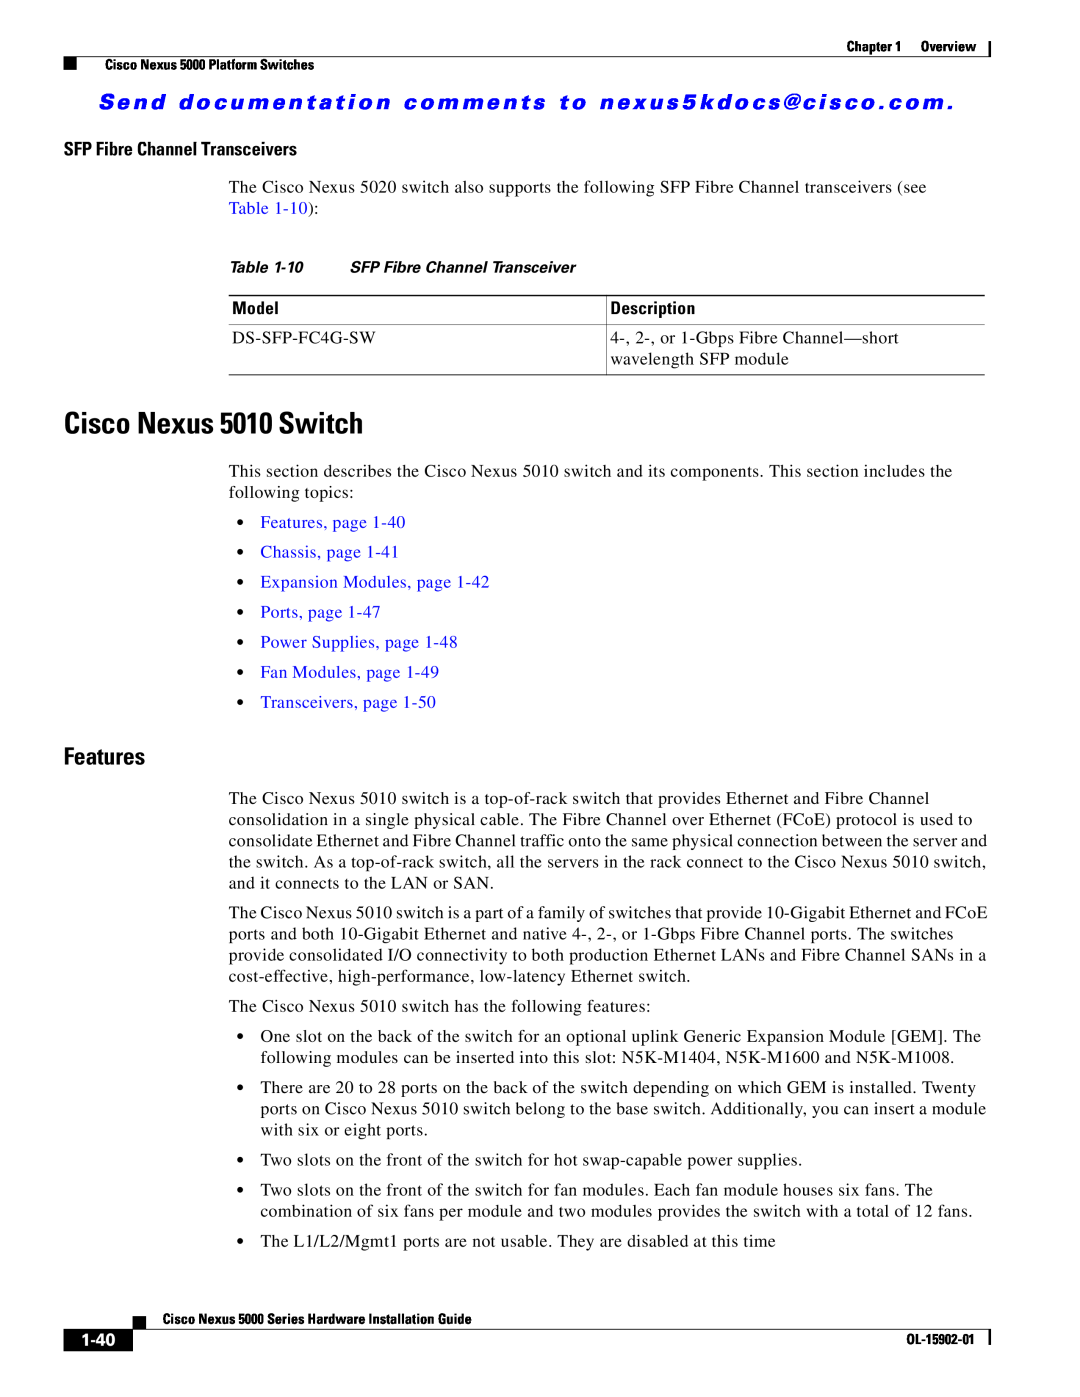 Cisco Systems 5000 manual Cisco Nexus 5010 Switch, Features, SFP Fibre Channel Transceivers, 1-40 